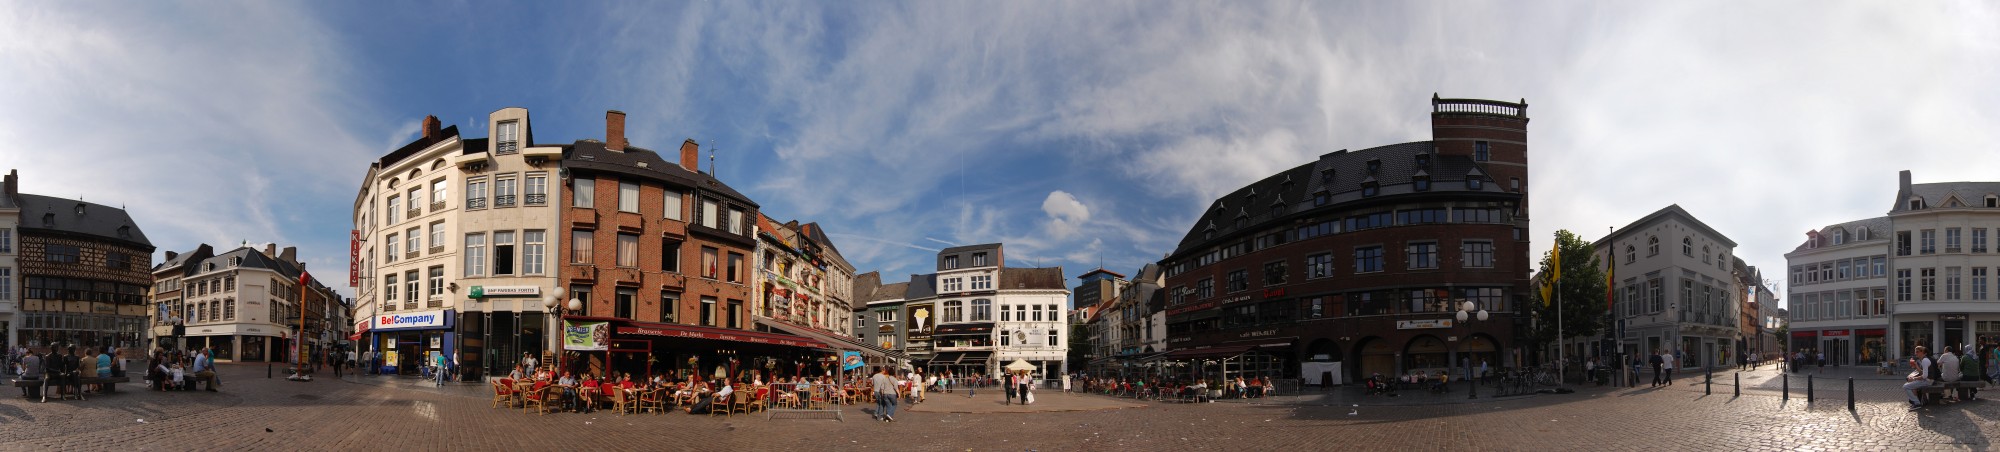 360° panoramics van Grote Markt, Hasselt